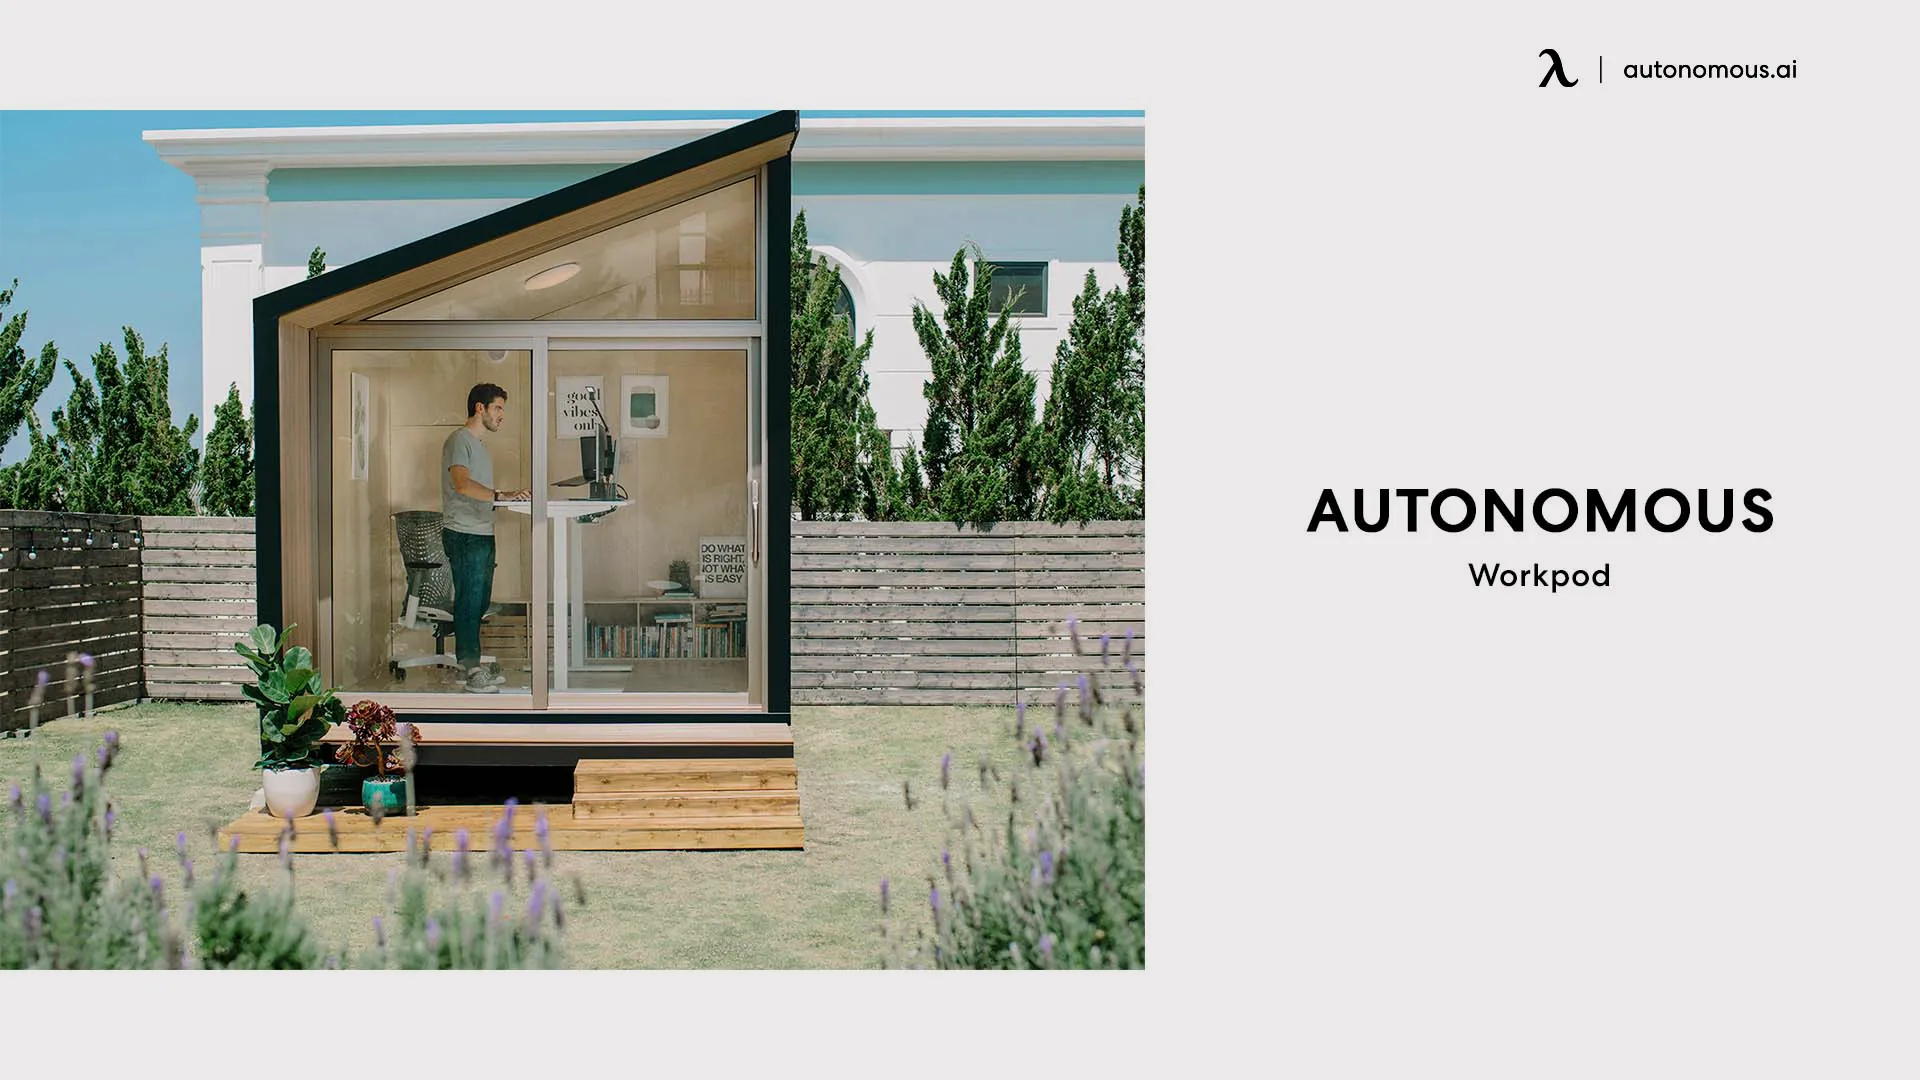 Autonomous WorkPod outdoor shed